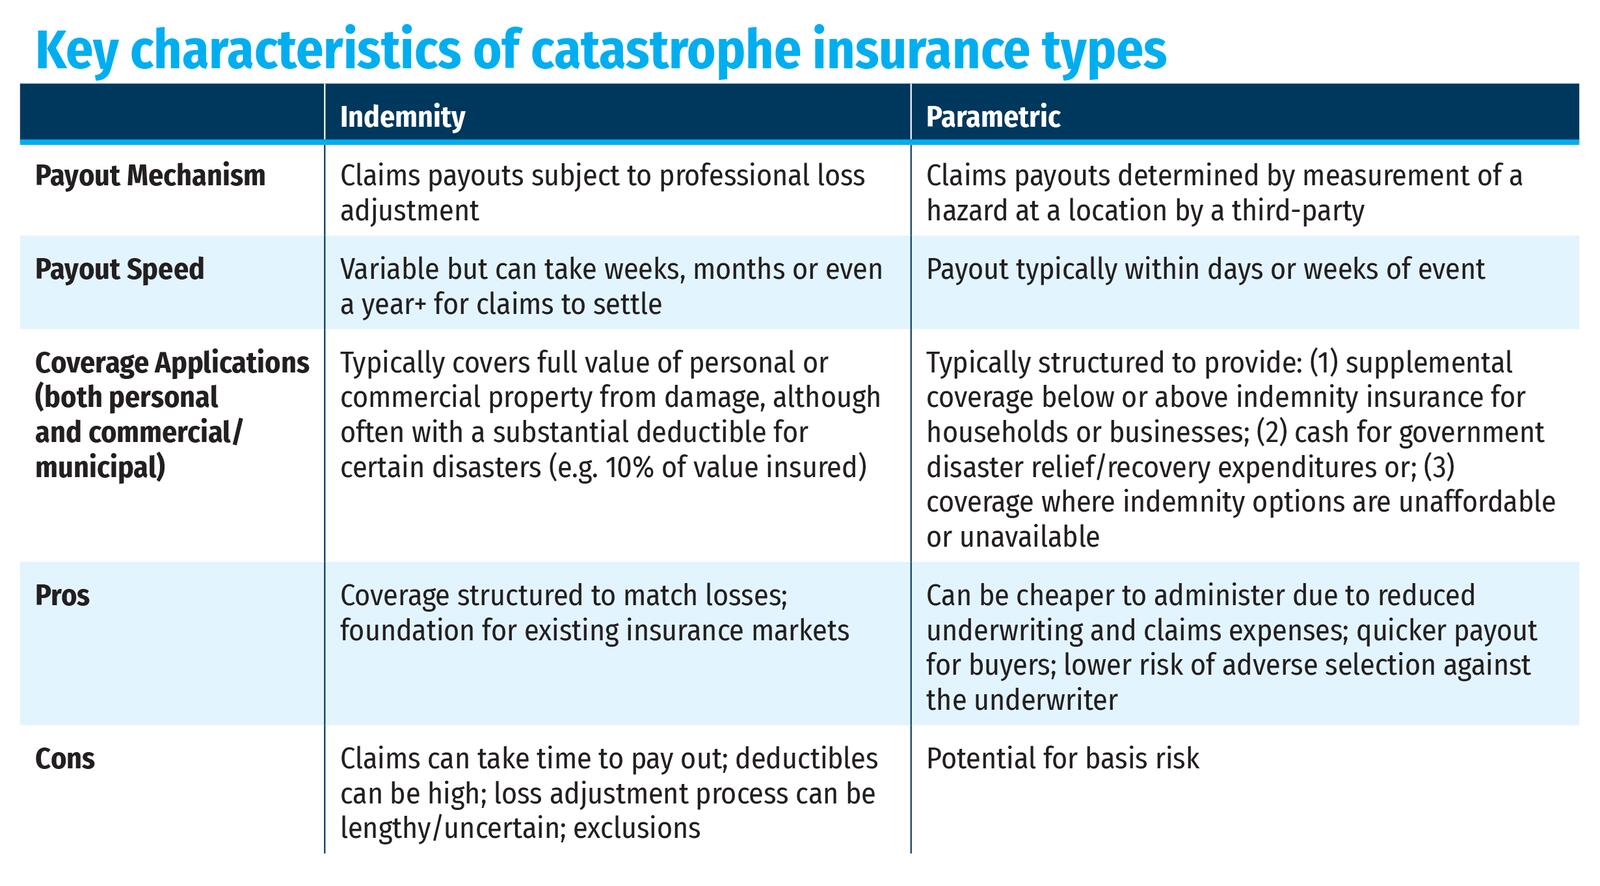 Key characteristics of catastrophe insurance types